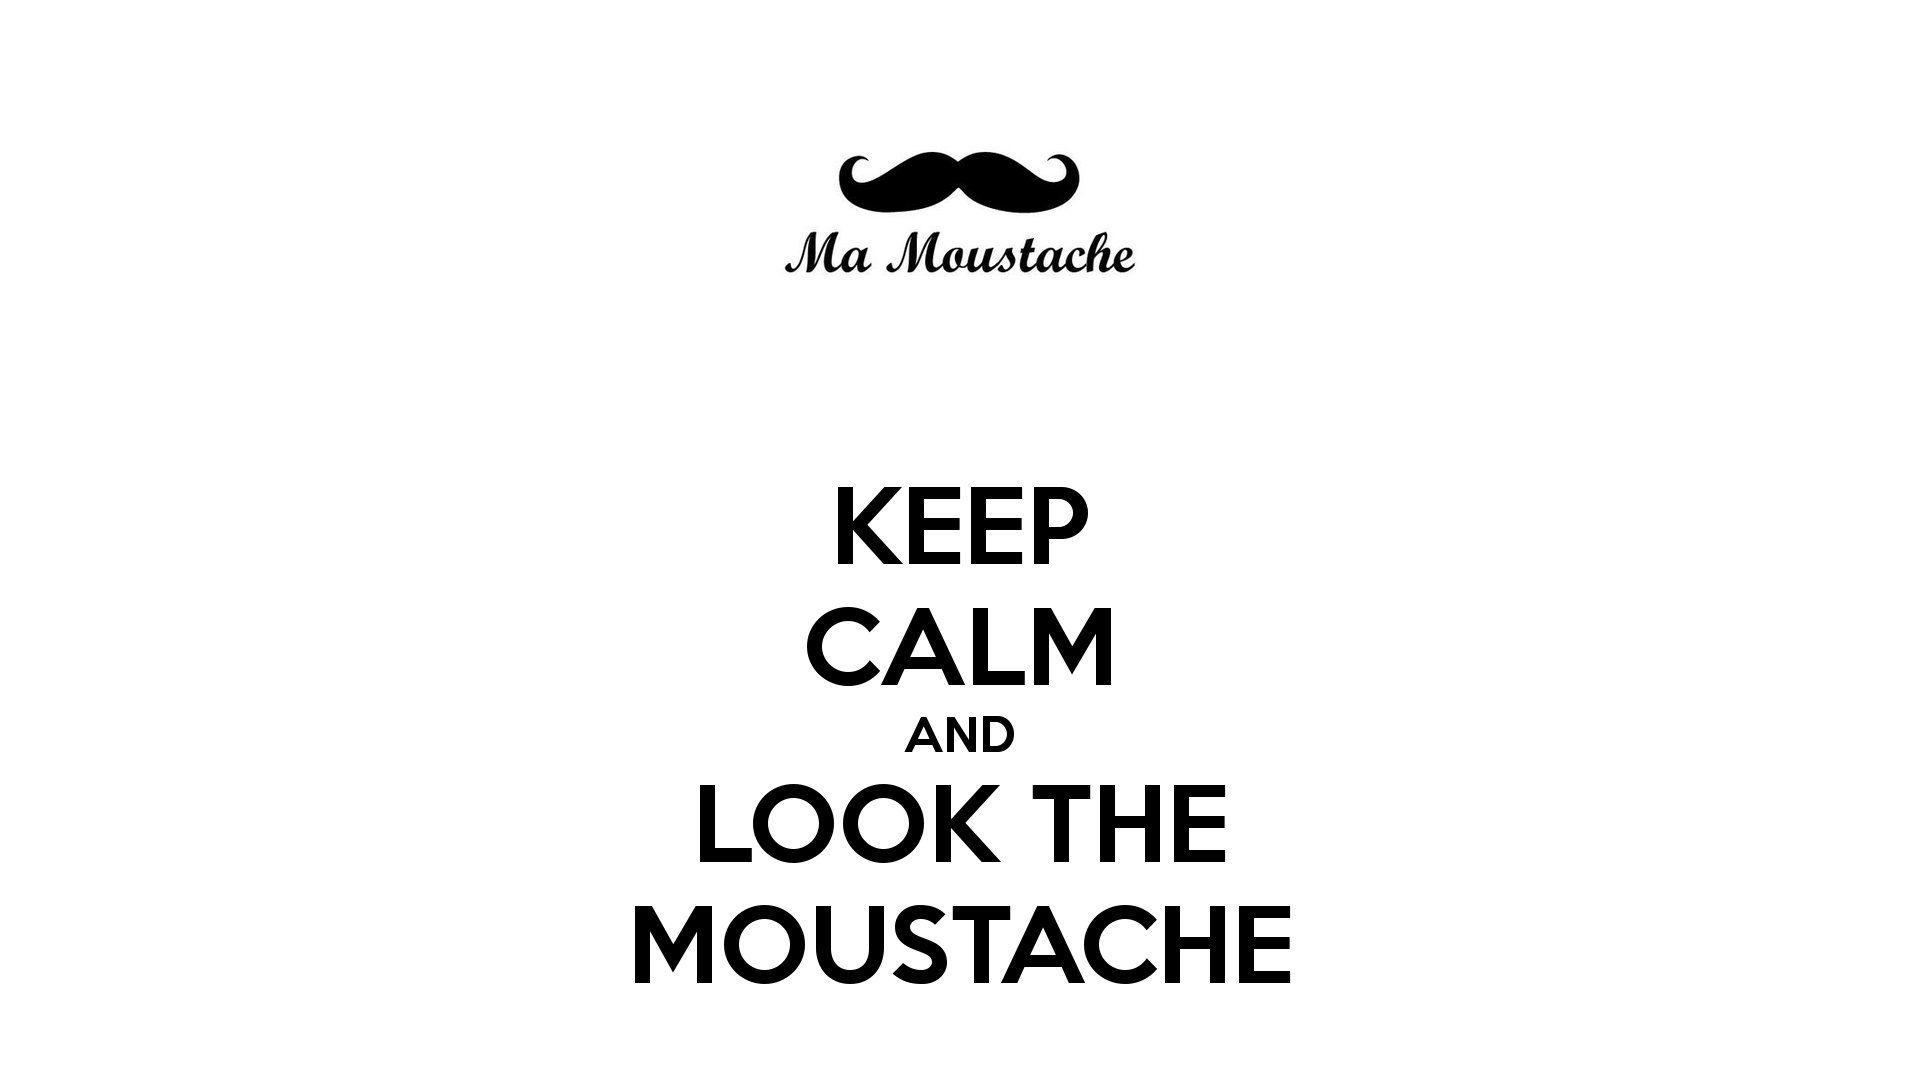 Moustache Wallpaper HD. Download Mustache HD Picture